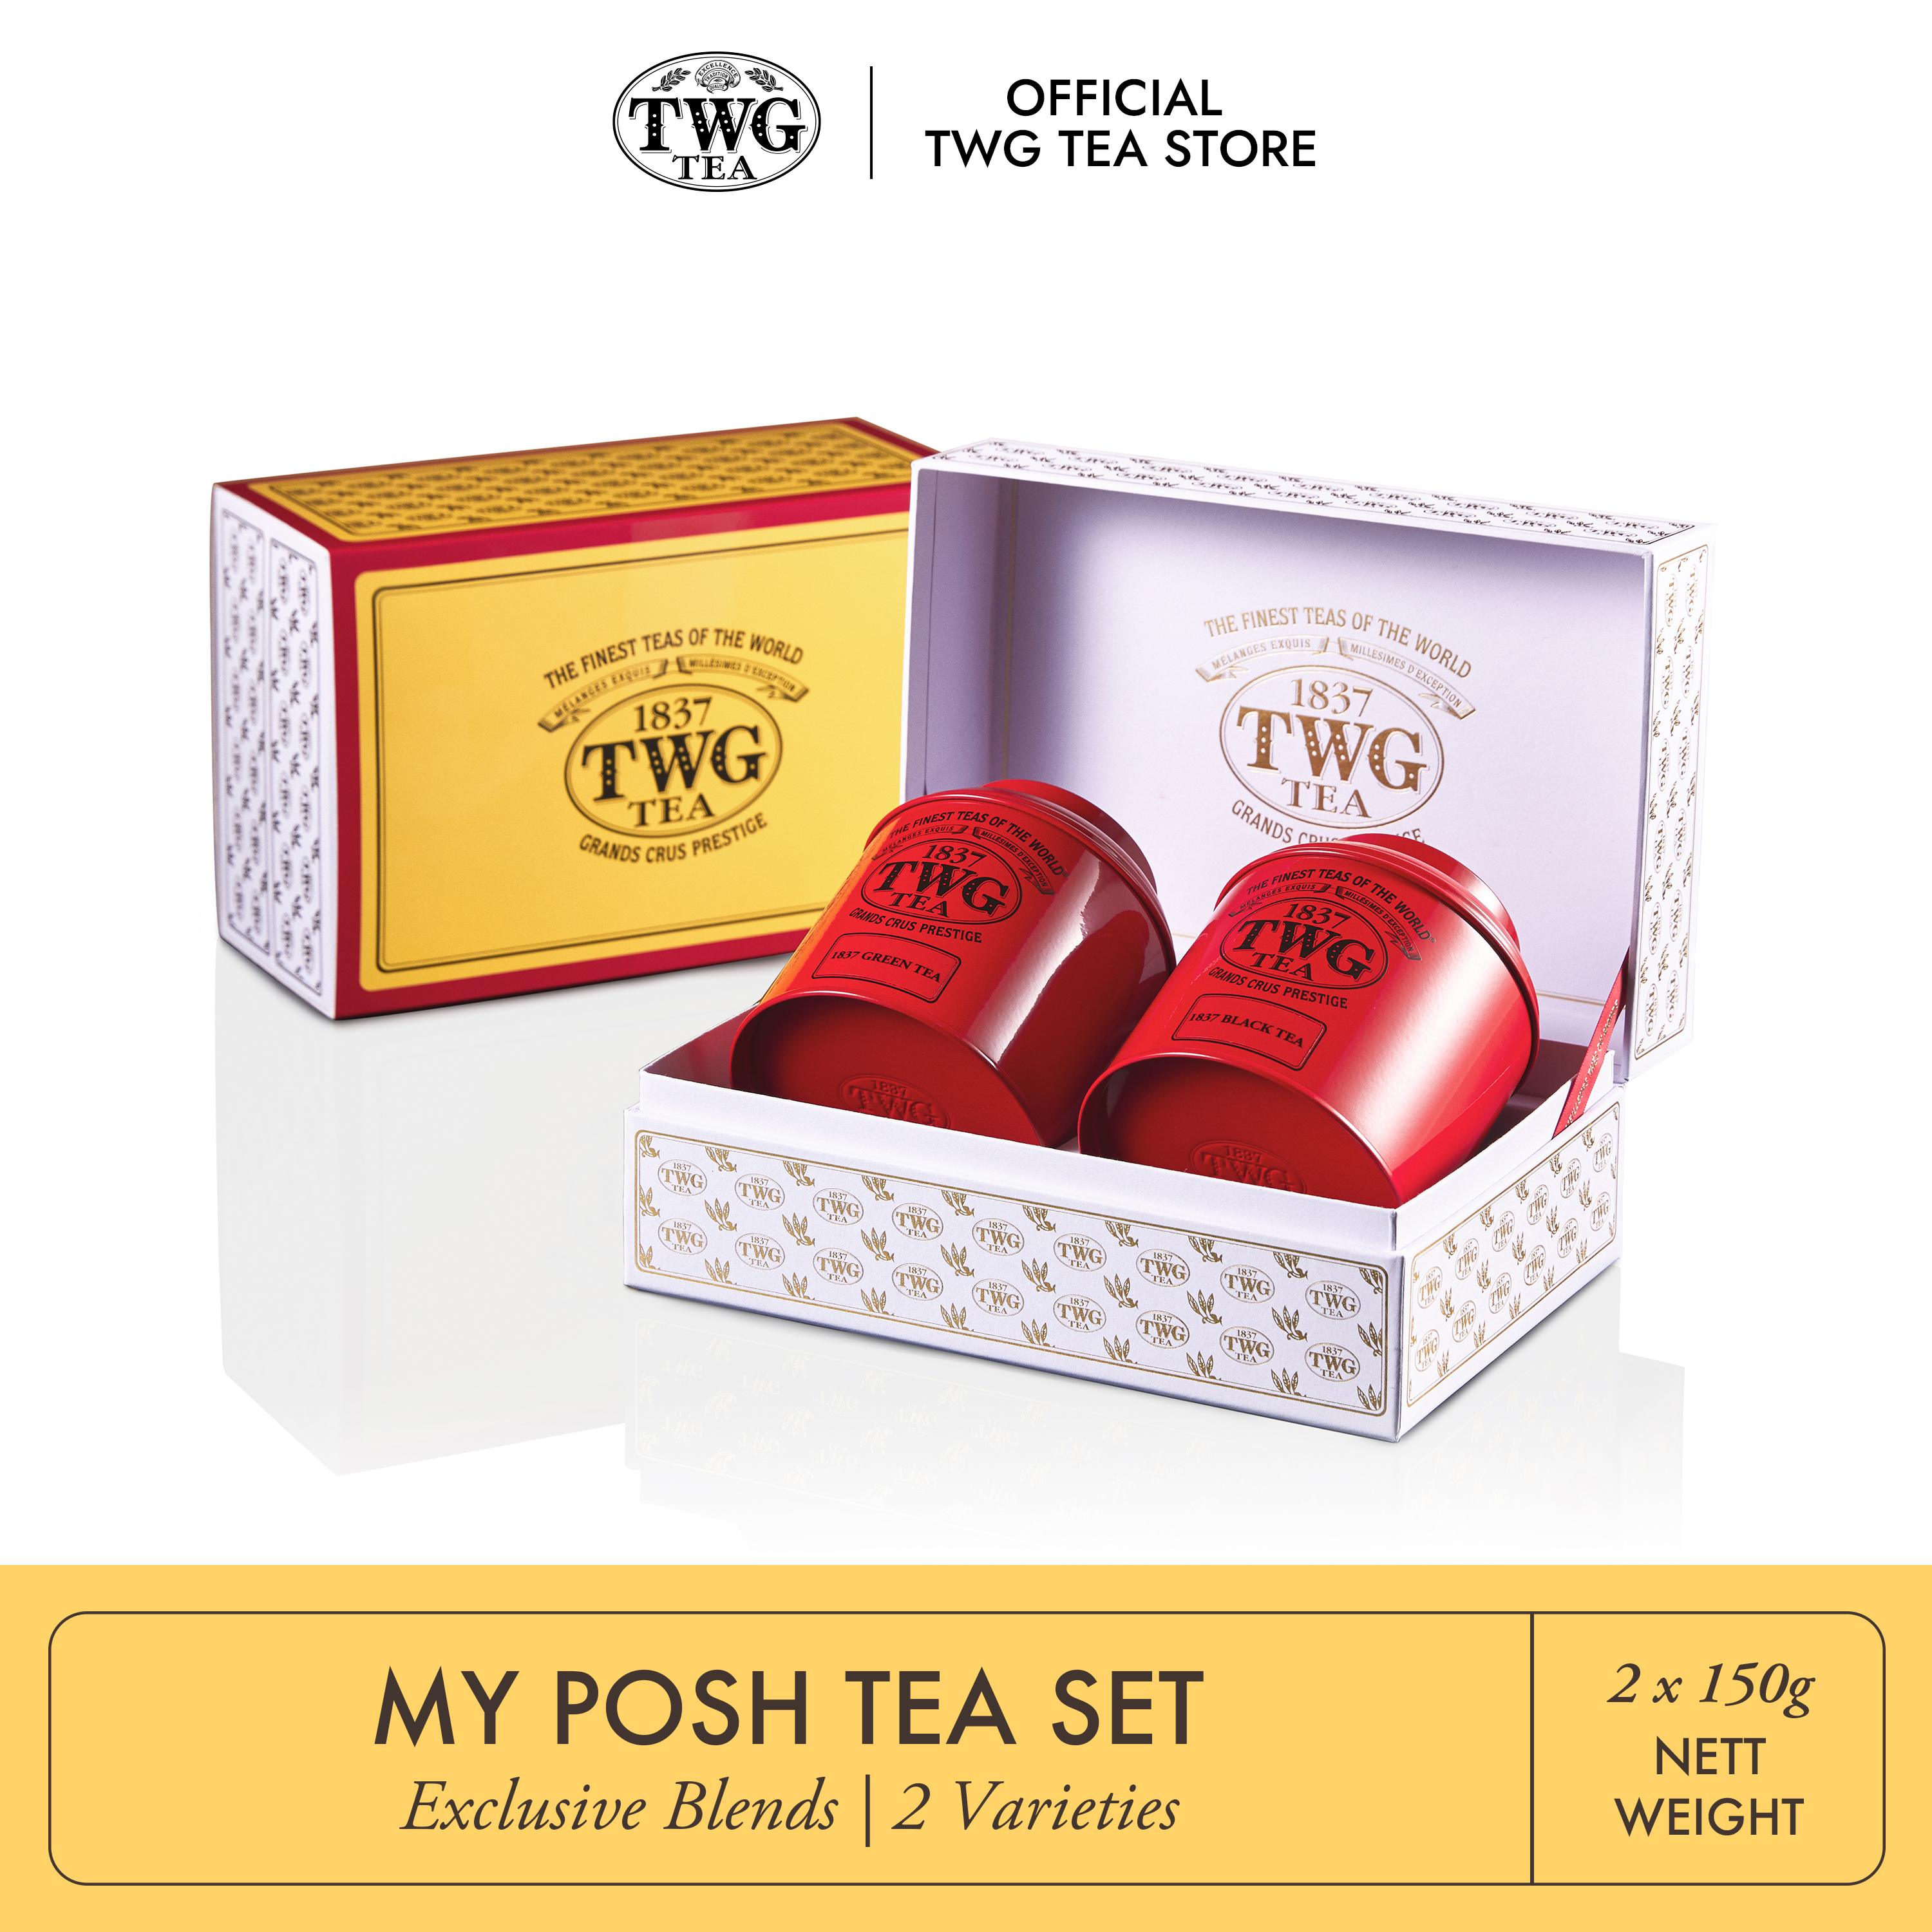 Luxury Lifestyle Brand TWG Tea Announces North American Debut - My VanCity